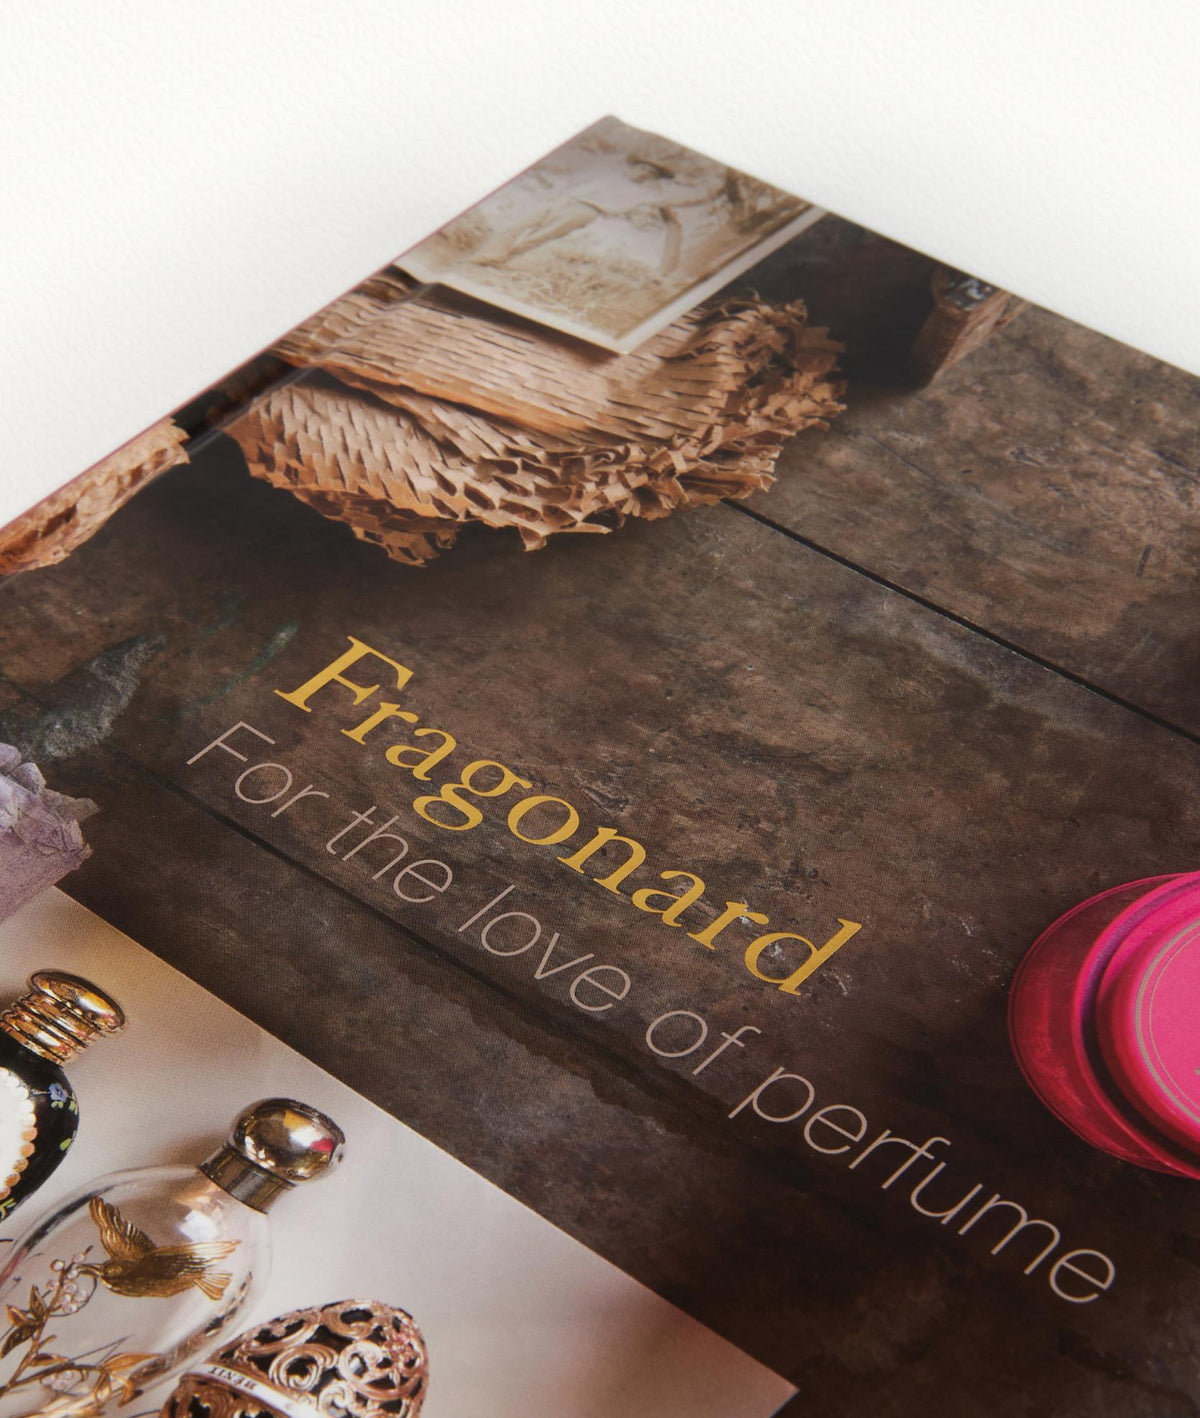 Fragonard - For The Love Of Perfume Coffee Table Book